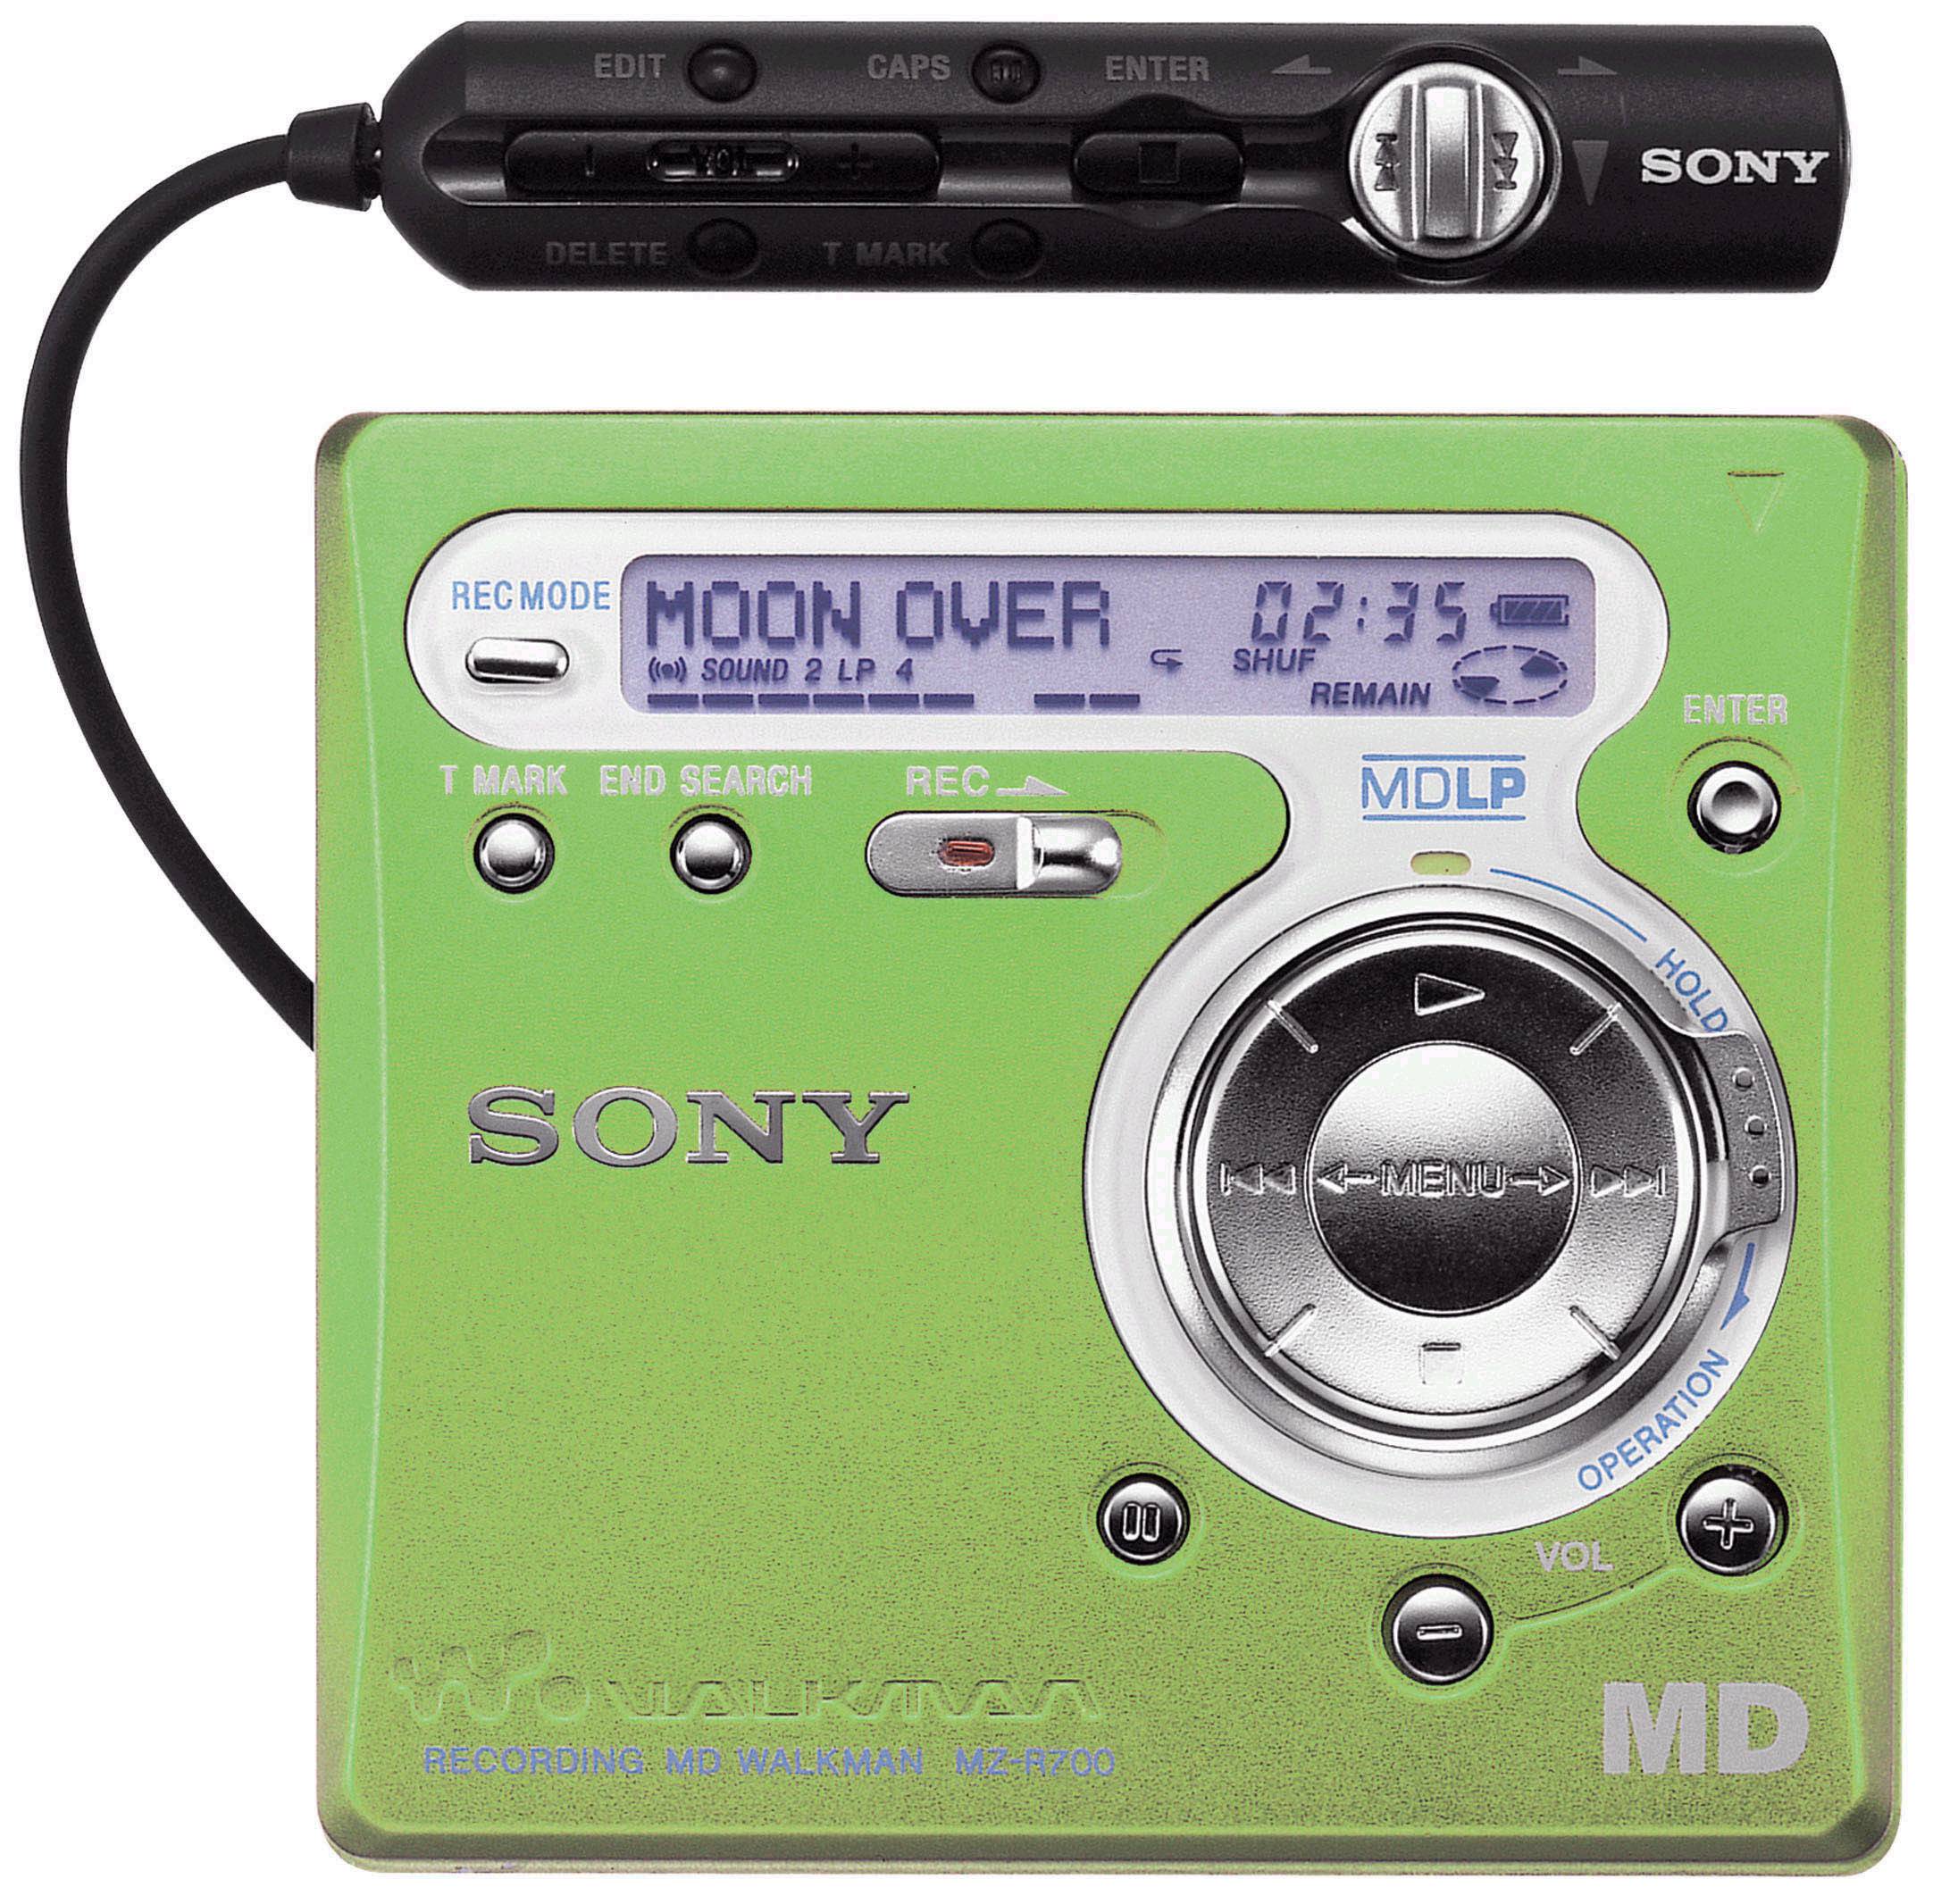 Sony MZ-R700